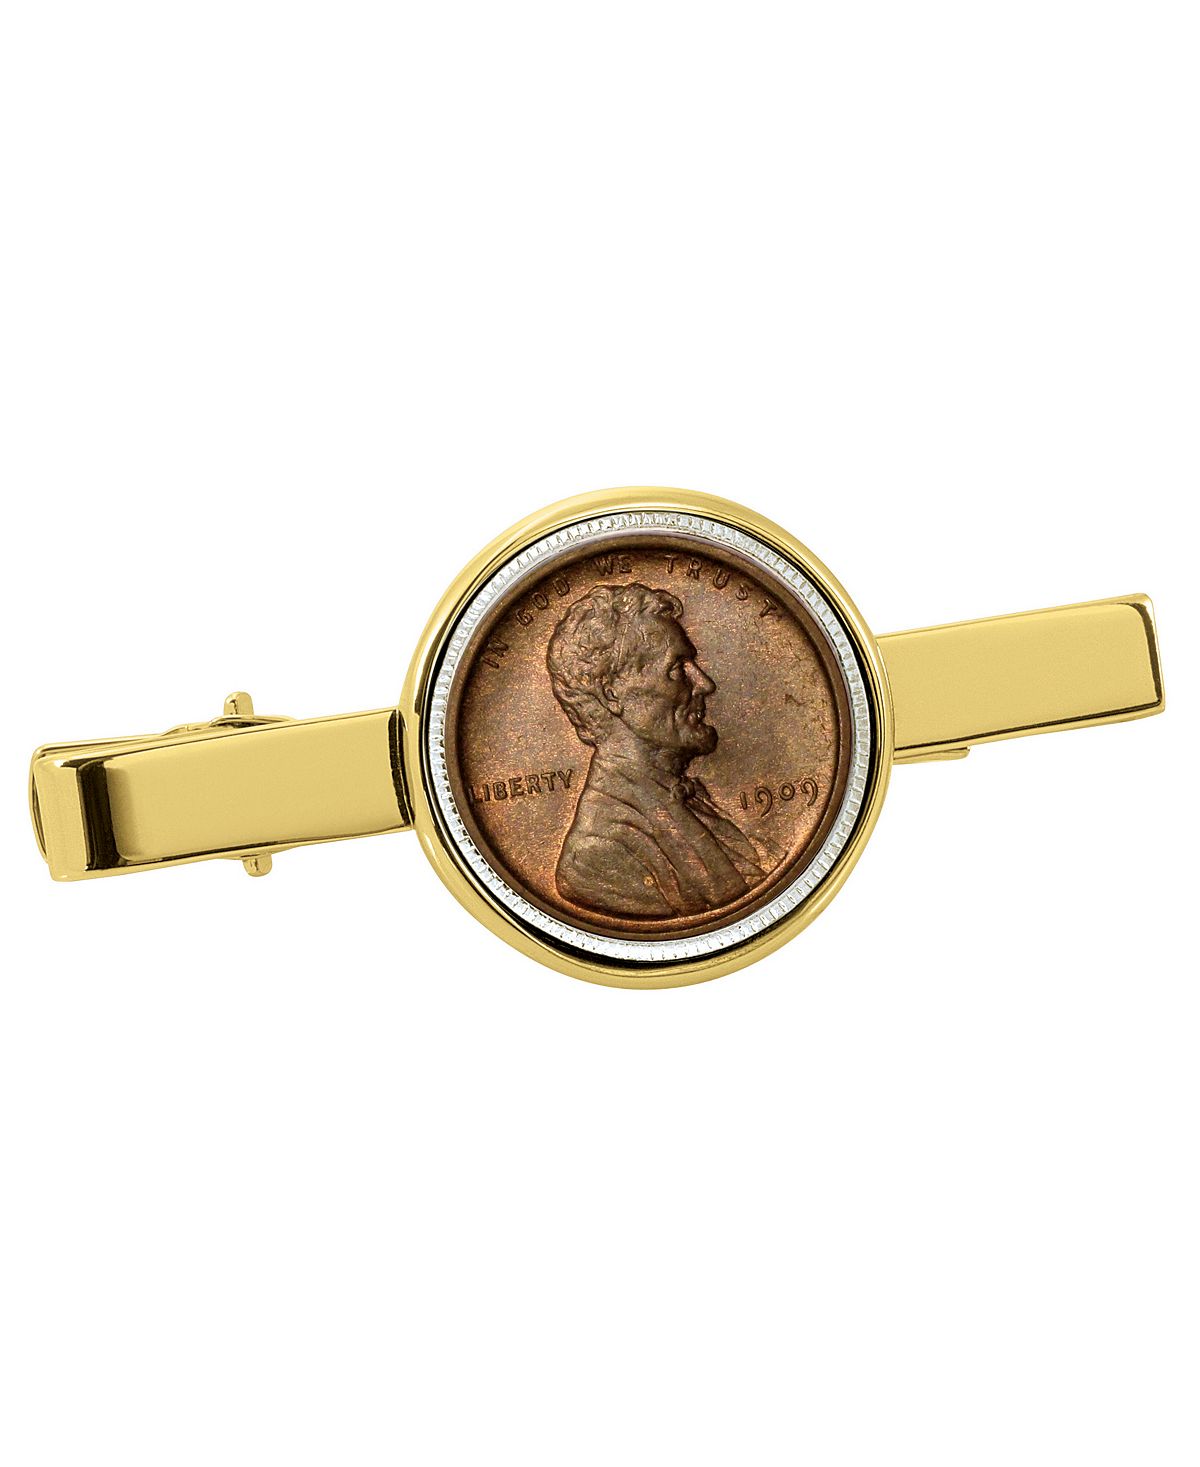 Зажим для галстука для монеты «Линкольн Пенни» первого года выпуска 1909 года American Coin Treasures 2021 maple leaf gold coin commonwealth queen s coin commemorative coin badge gift souvenir coins